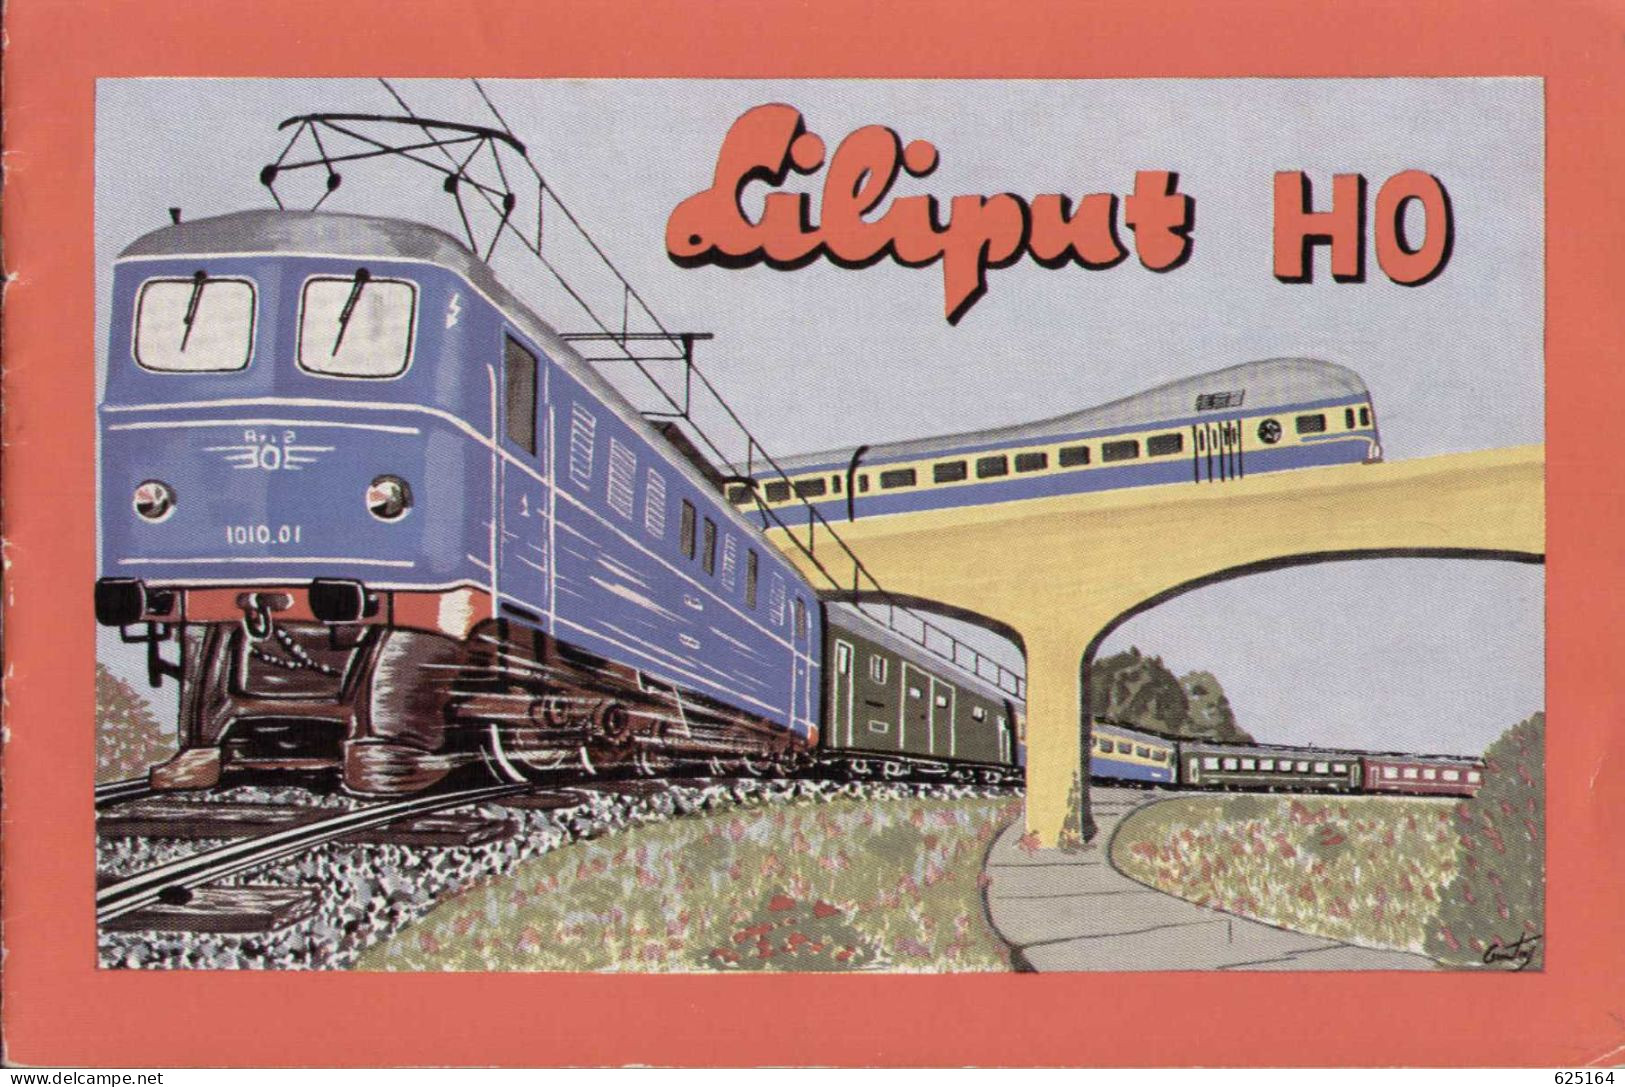 Catalogue LILIPUT 1958 Niederländische Ausgabe Maßstab HO 1:87 - En Néerlandais Et Allemand - Dutch